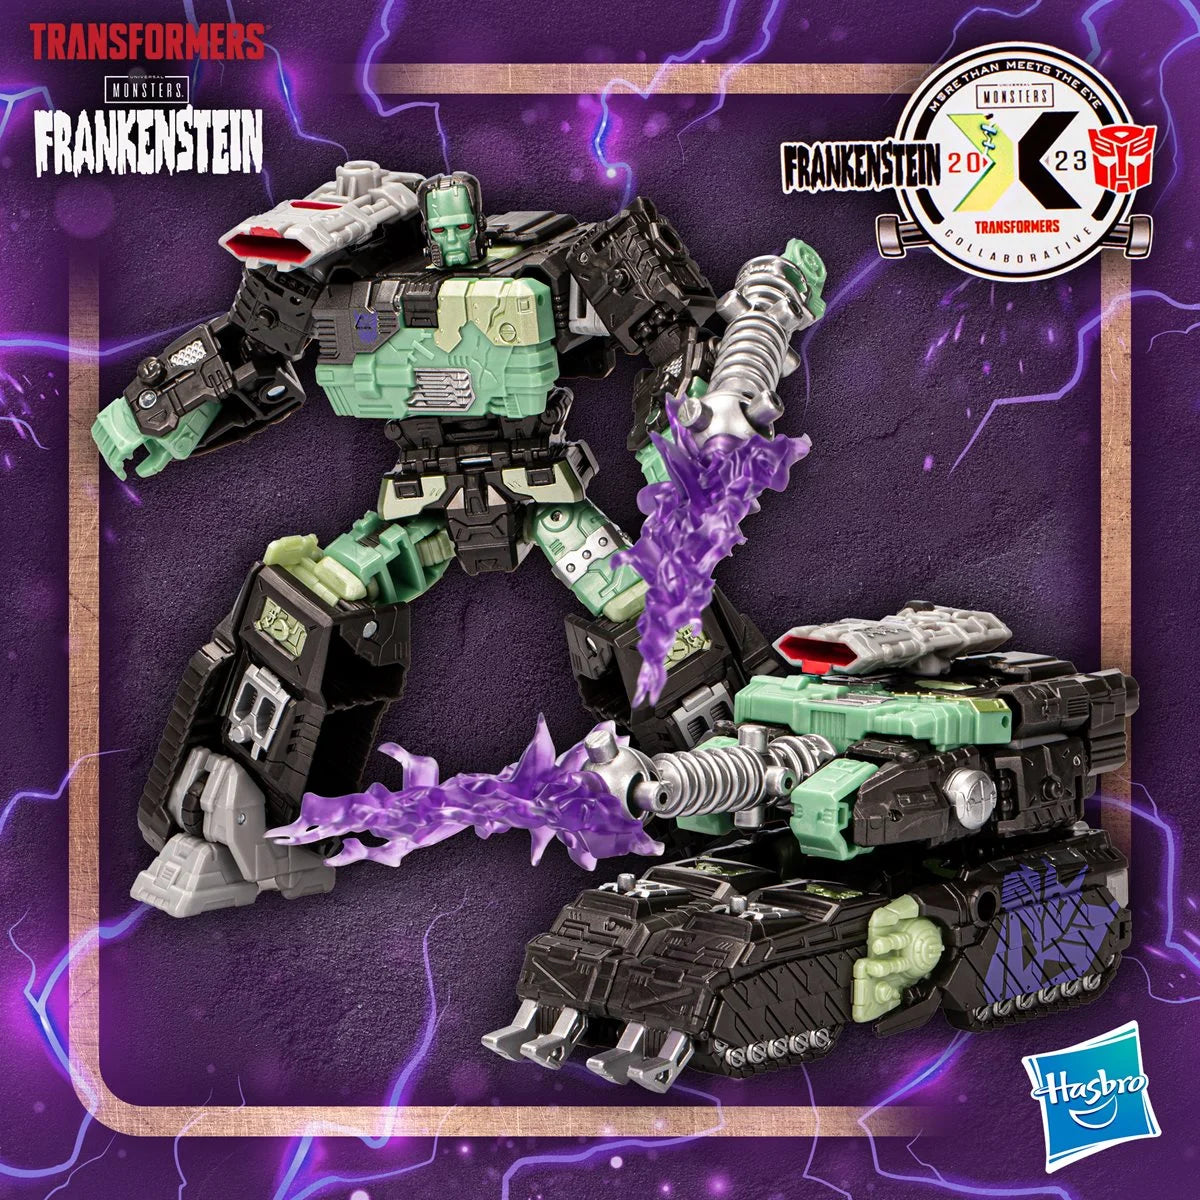 Transformers x Universal Monsters Frankenstein Frankentron - Exclusive